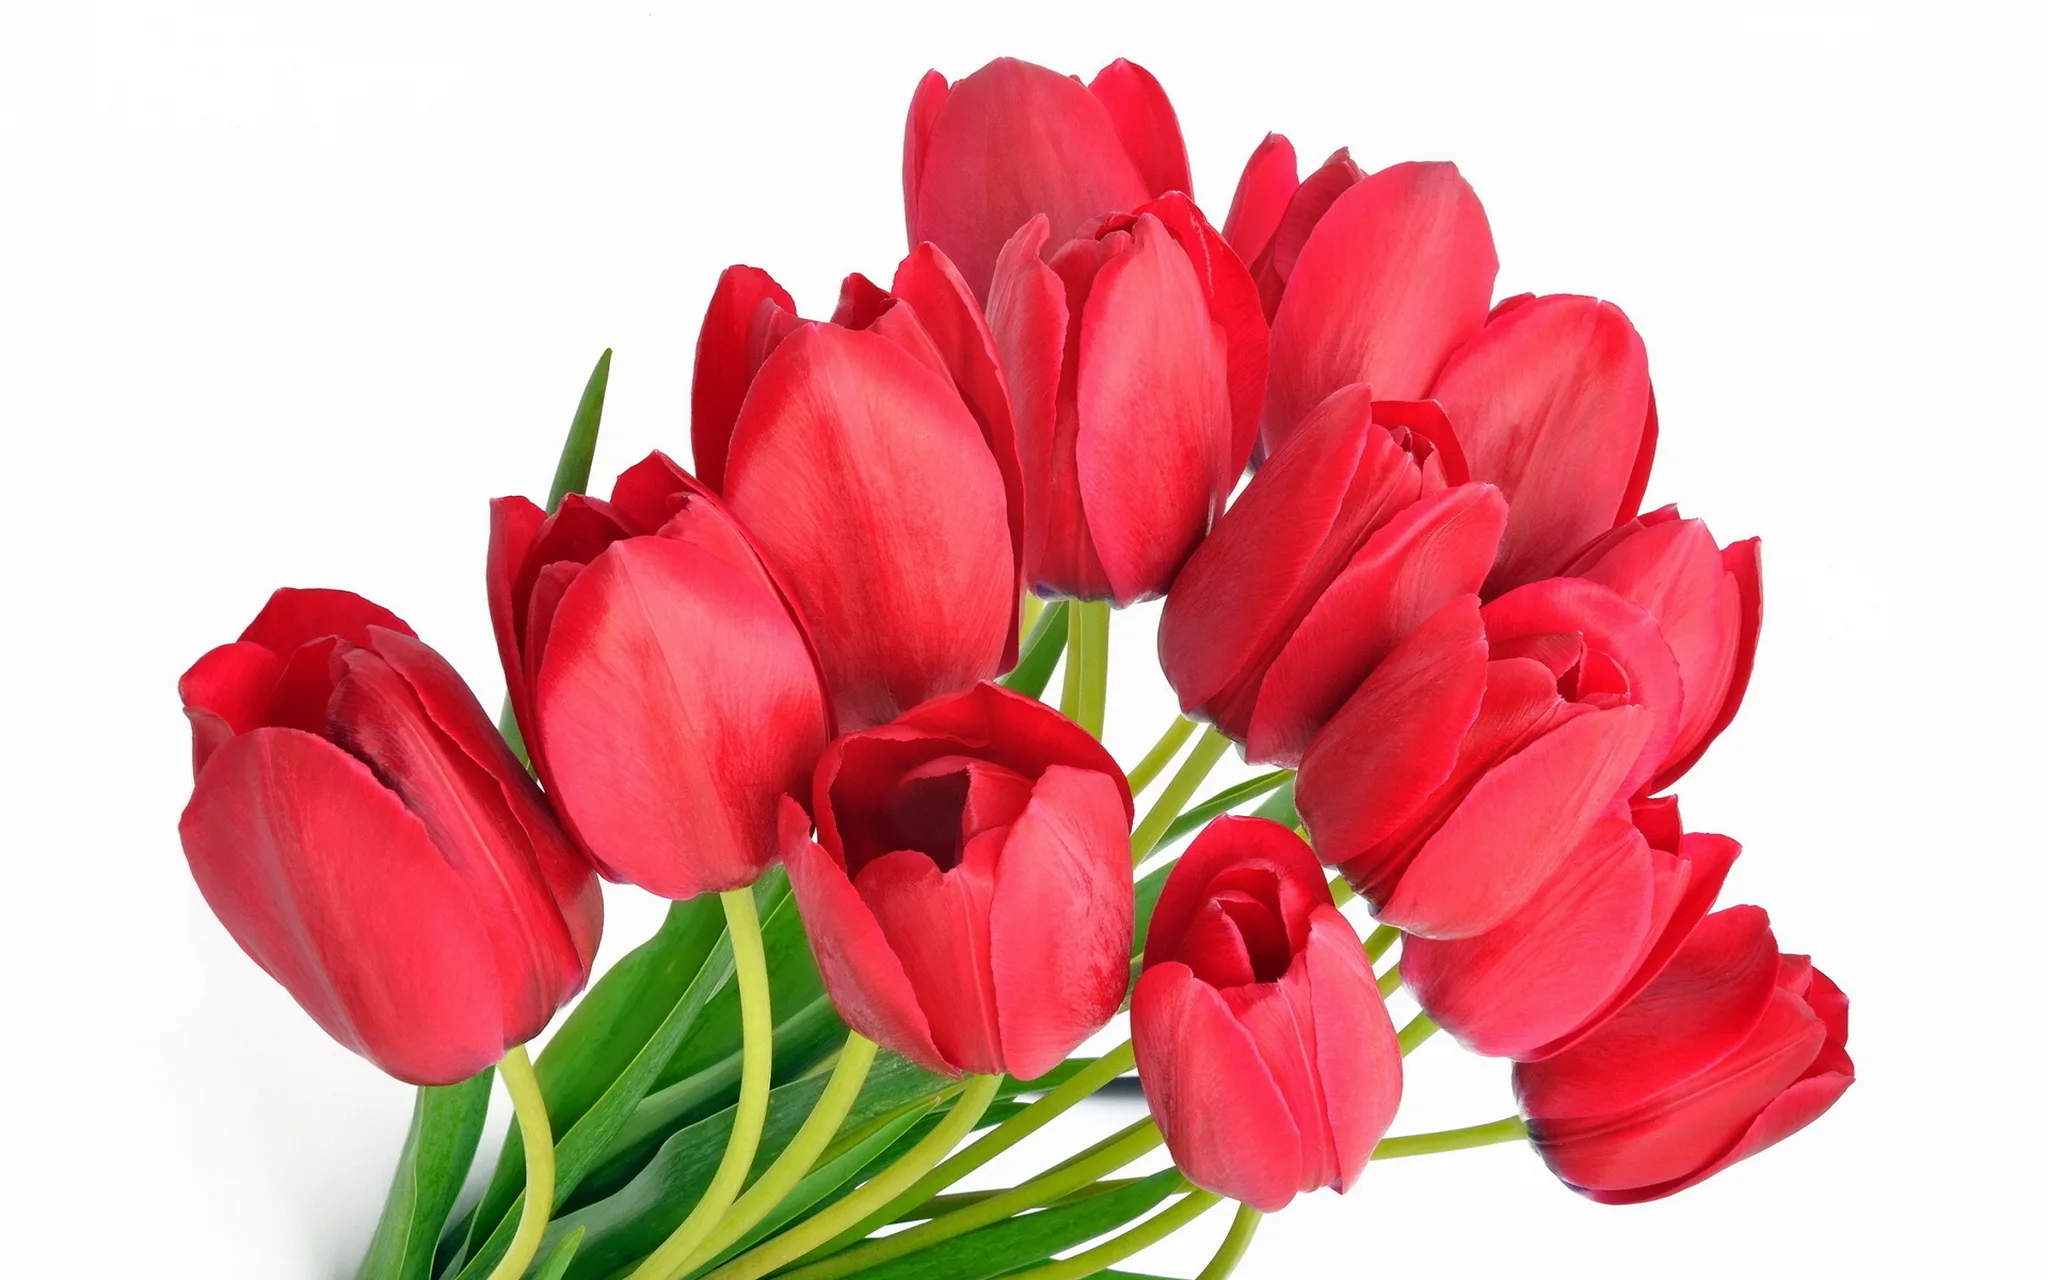 8 martga tabriklar. С 8 мартом тюльпаны. Цветы тюльпаны. Красные тюльпаны. Тюльпаны открытка.